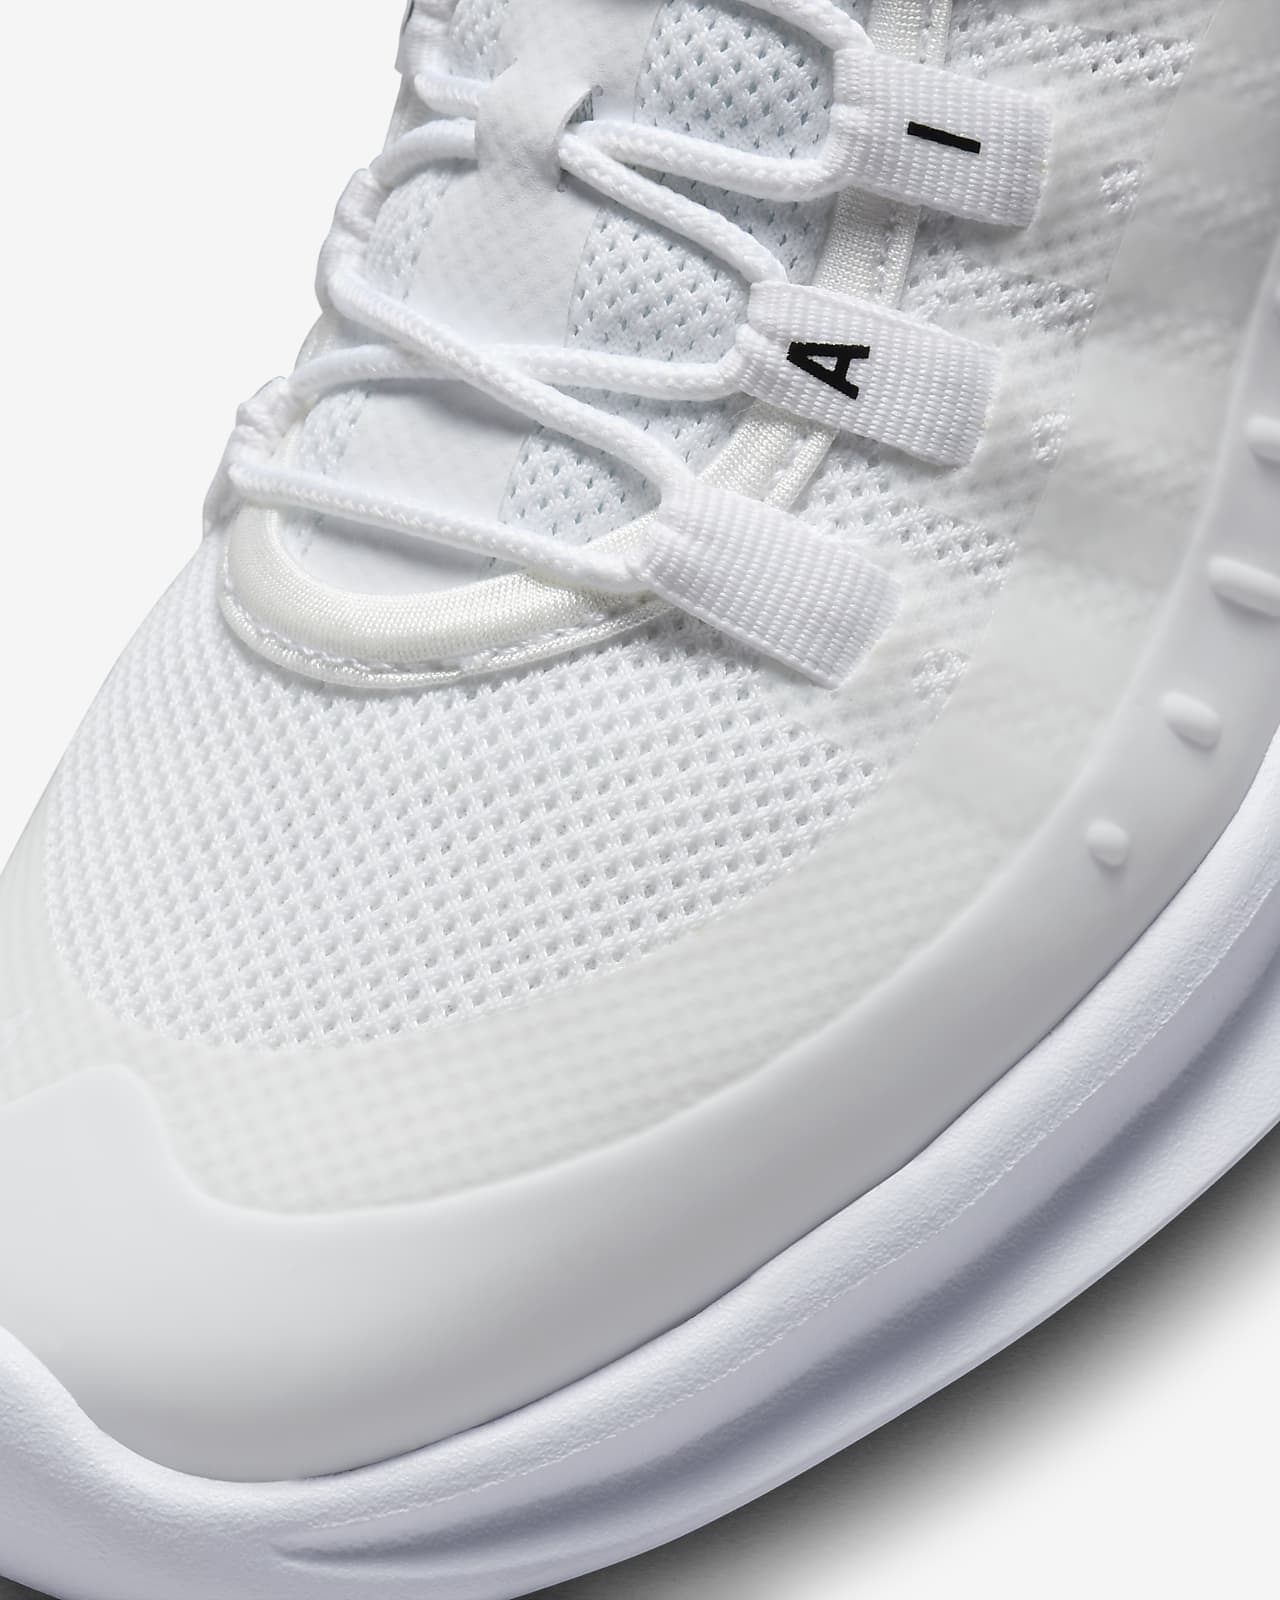 nike women's air max axis shoes - white/black